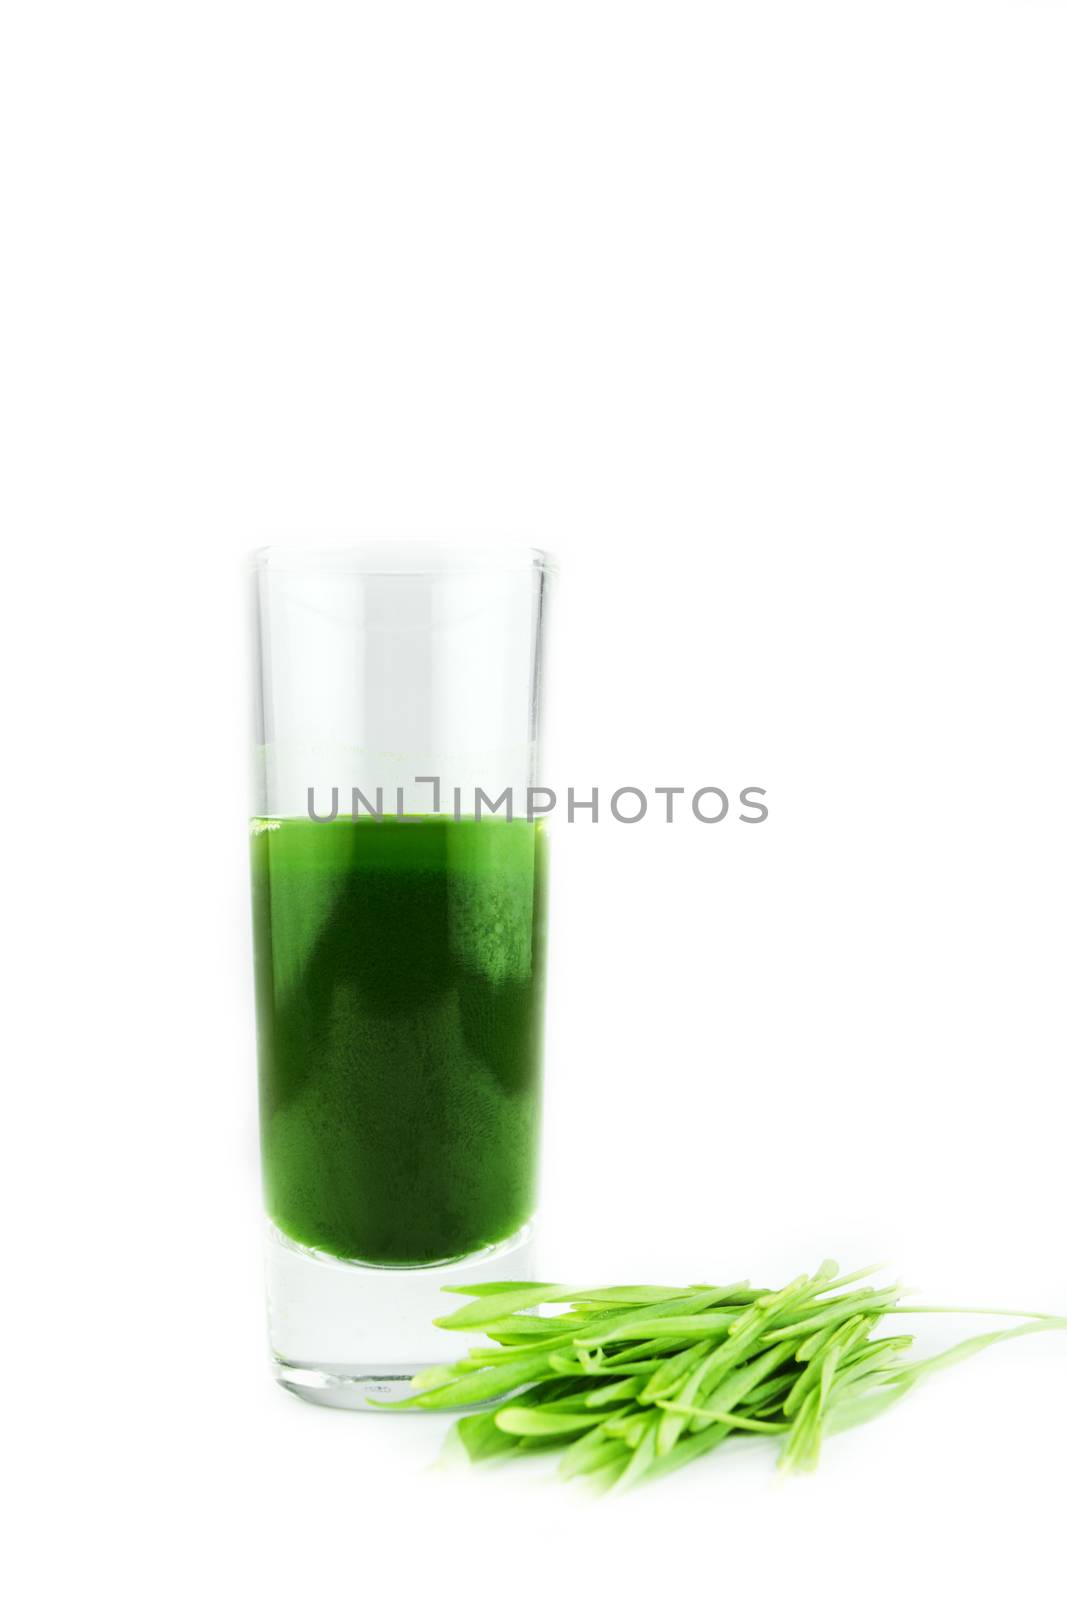 Wheathgrass juice on white background